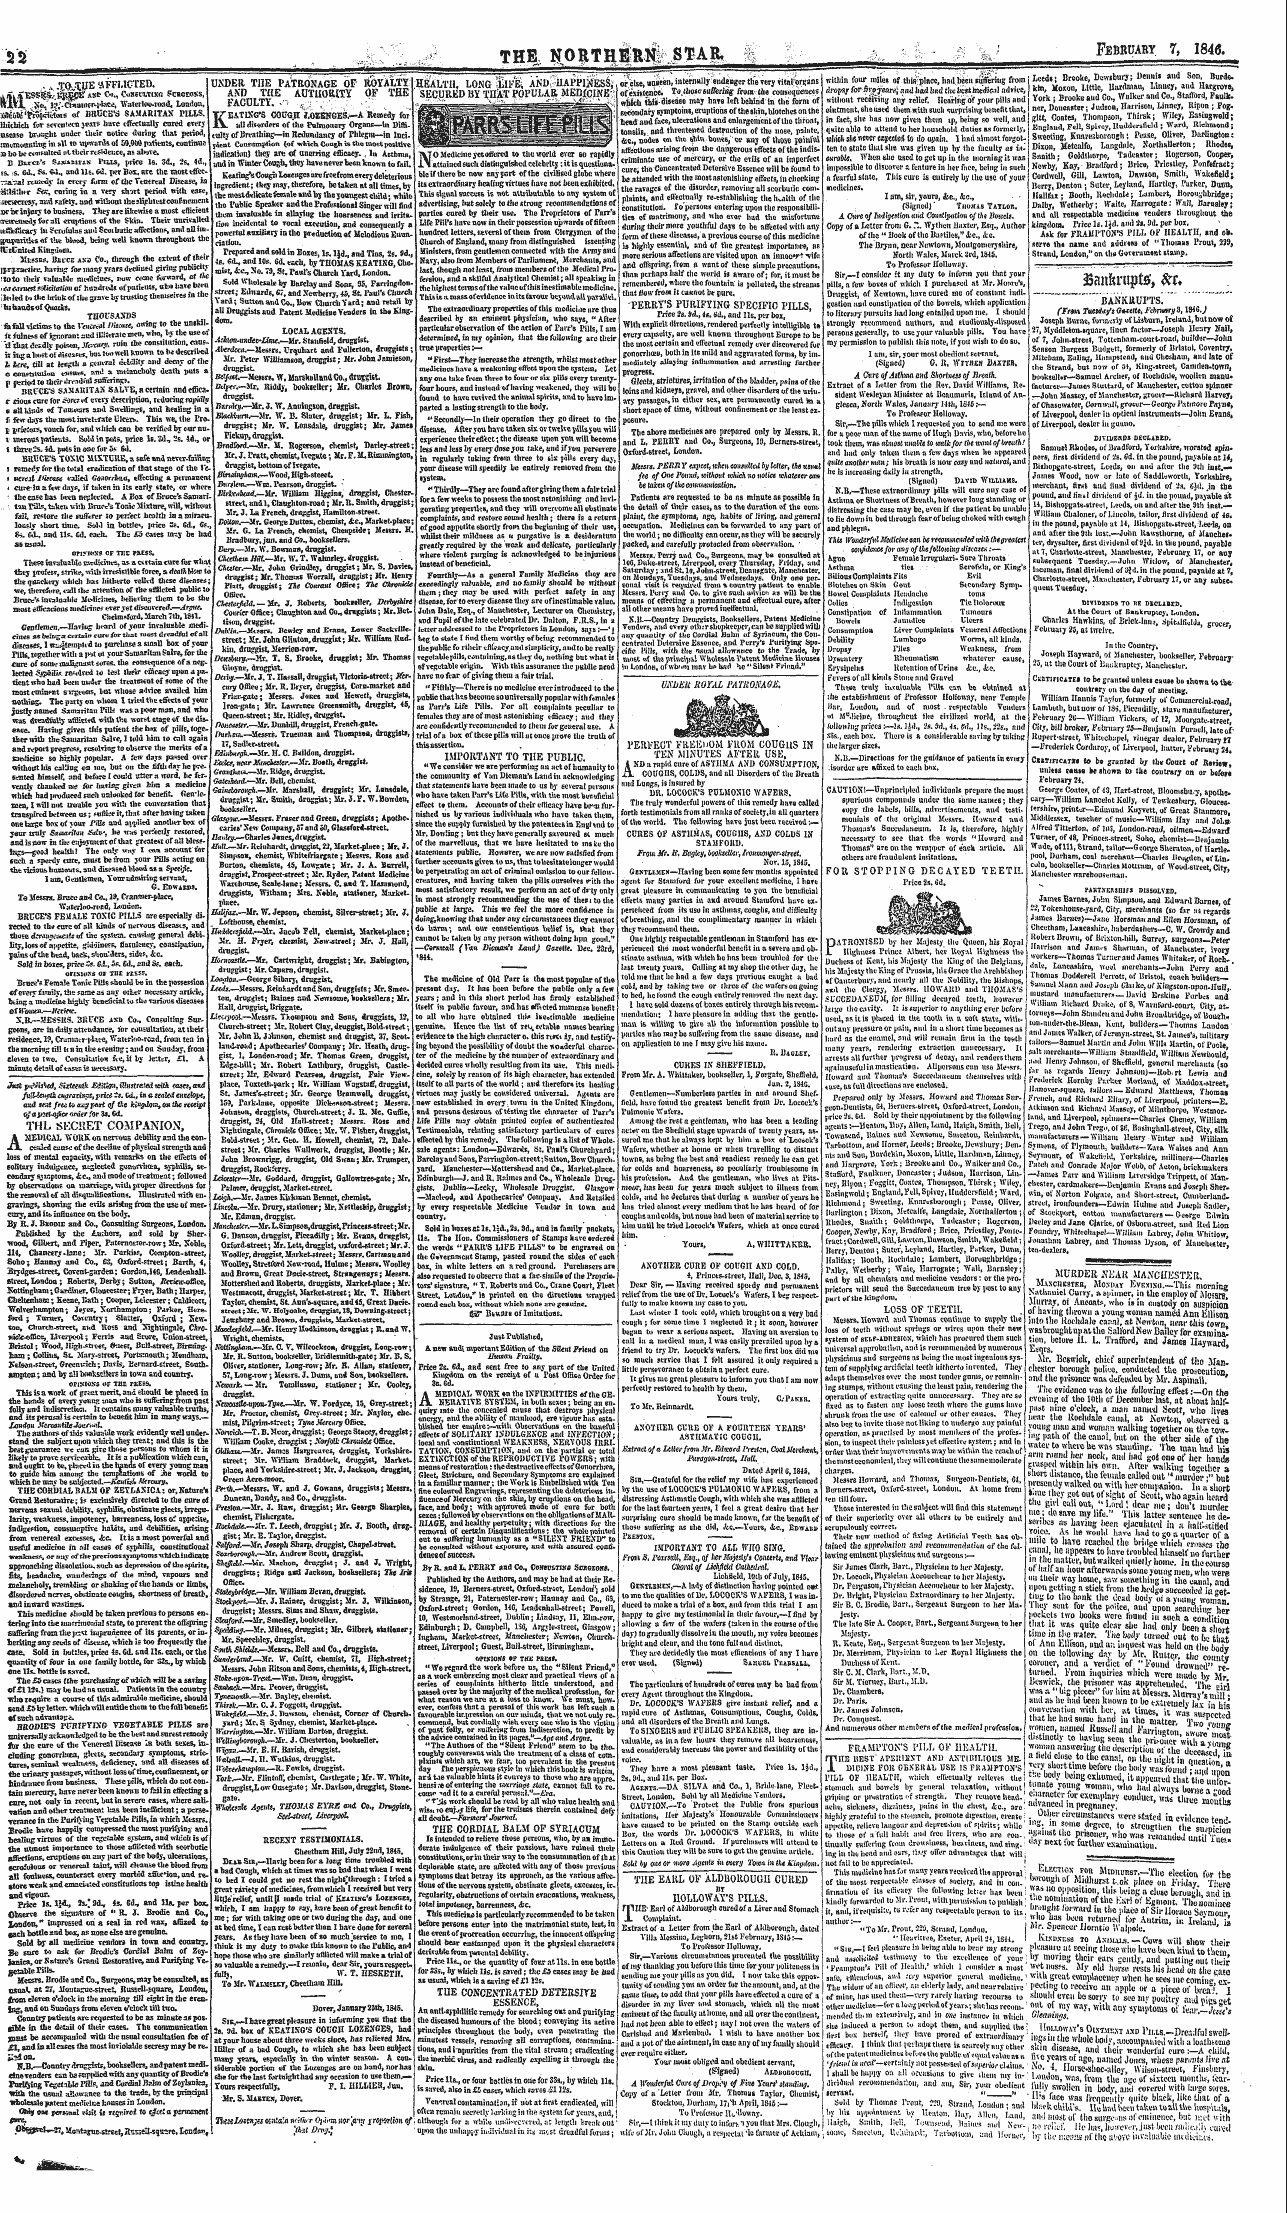 Northern Star (1837-1852): jS F Y, 3rd edition - Ad00207